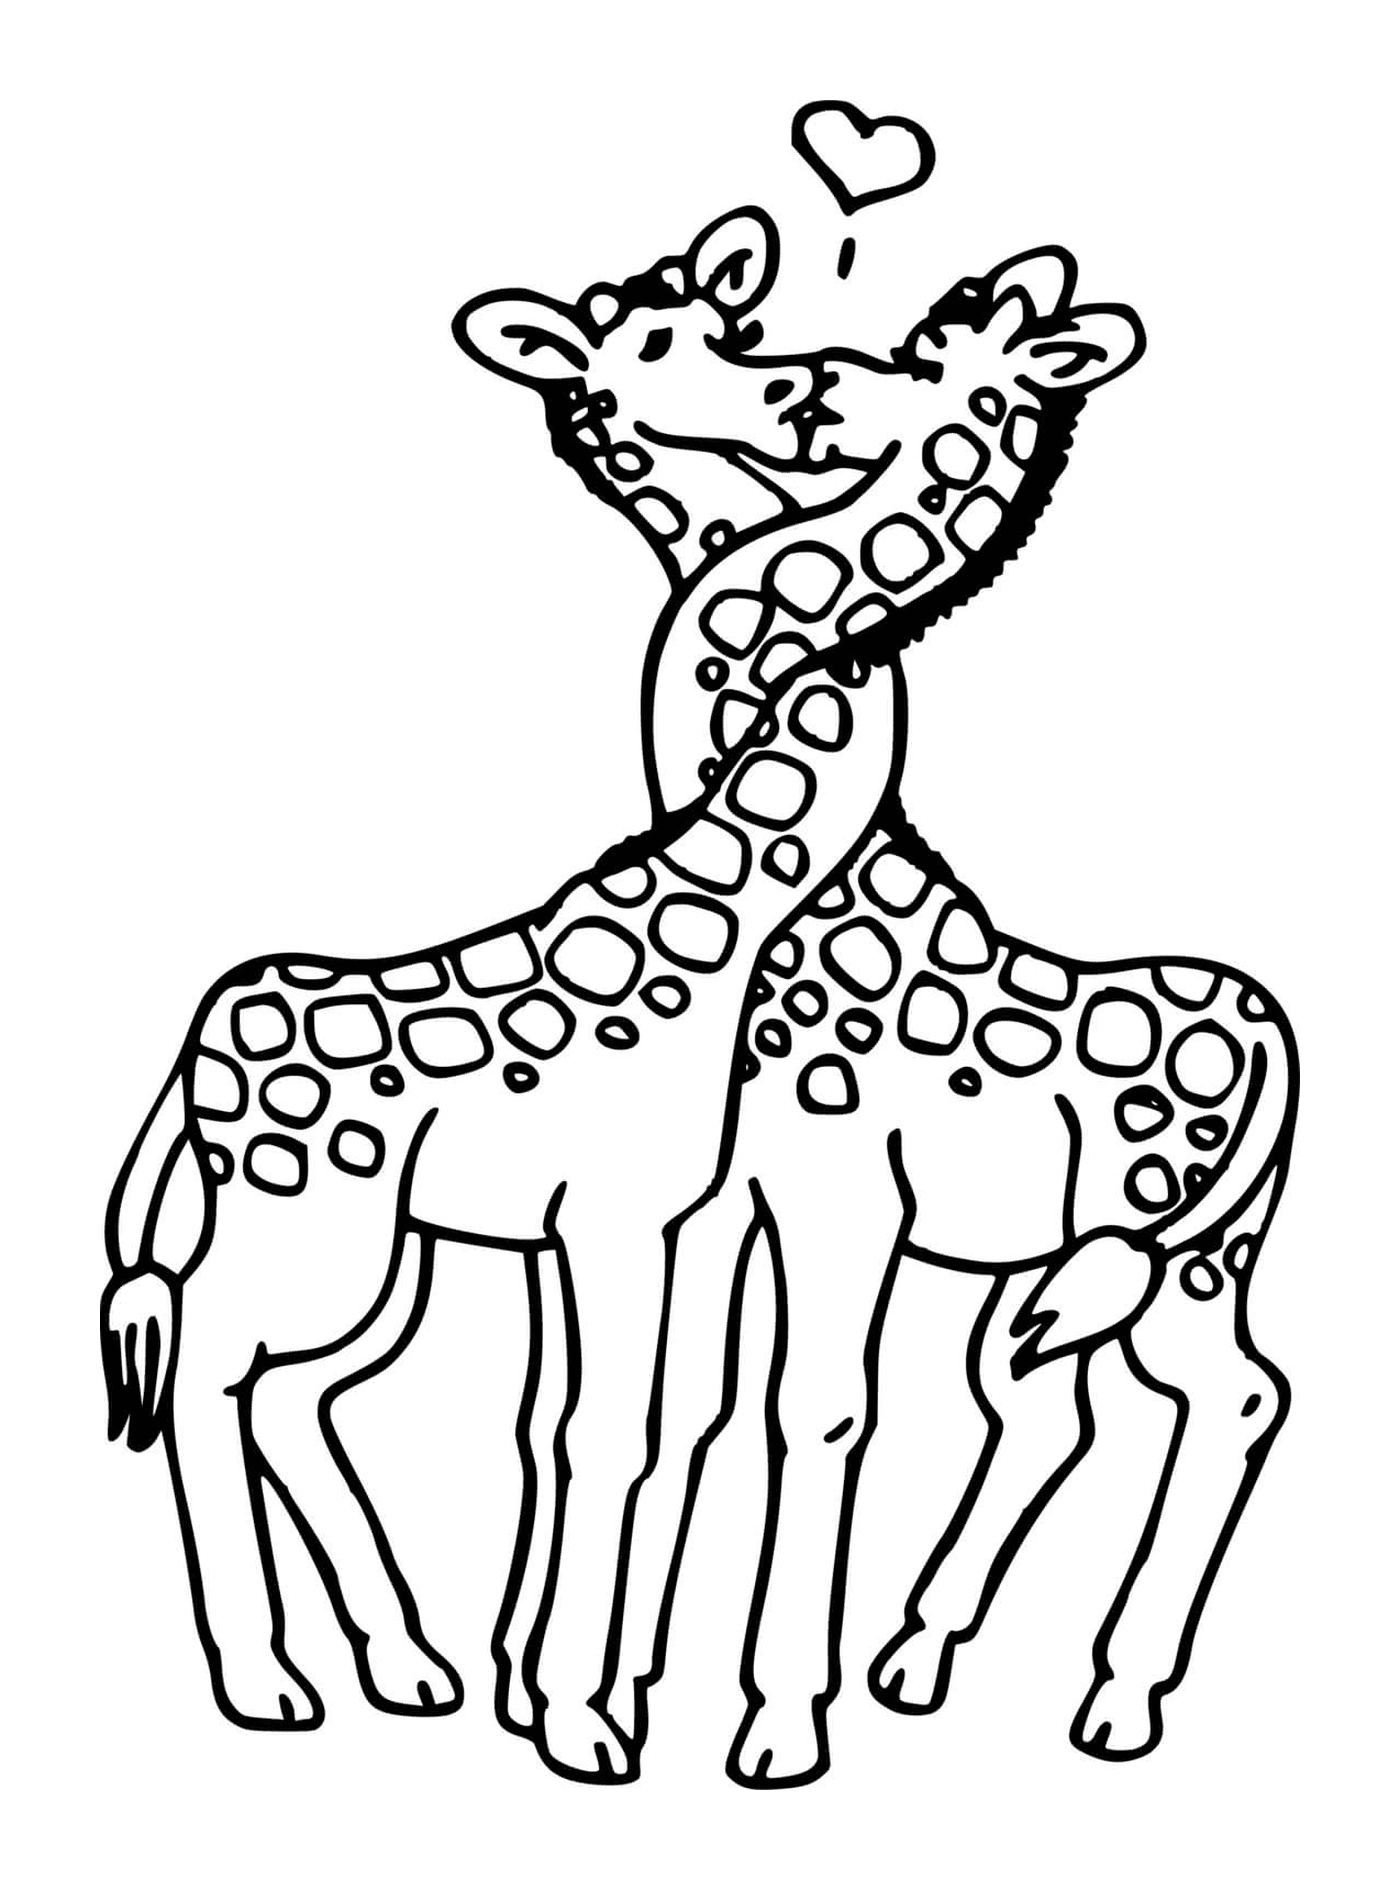   Deux girafes qui s'embrassent 